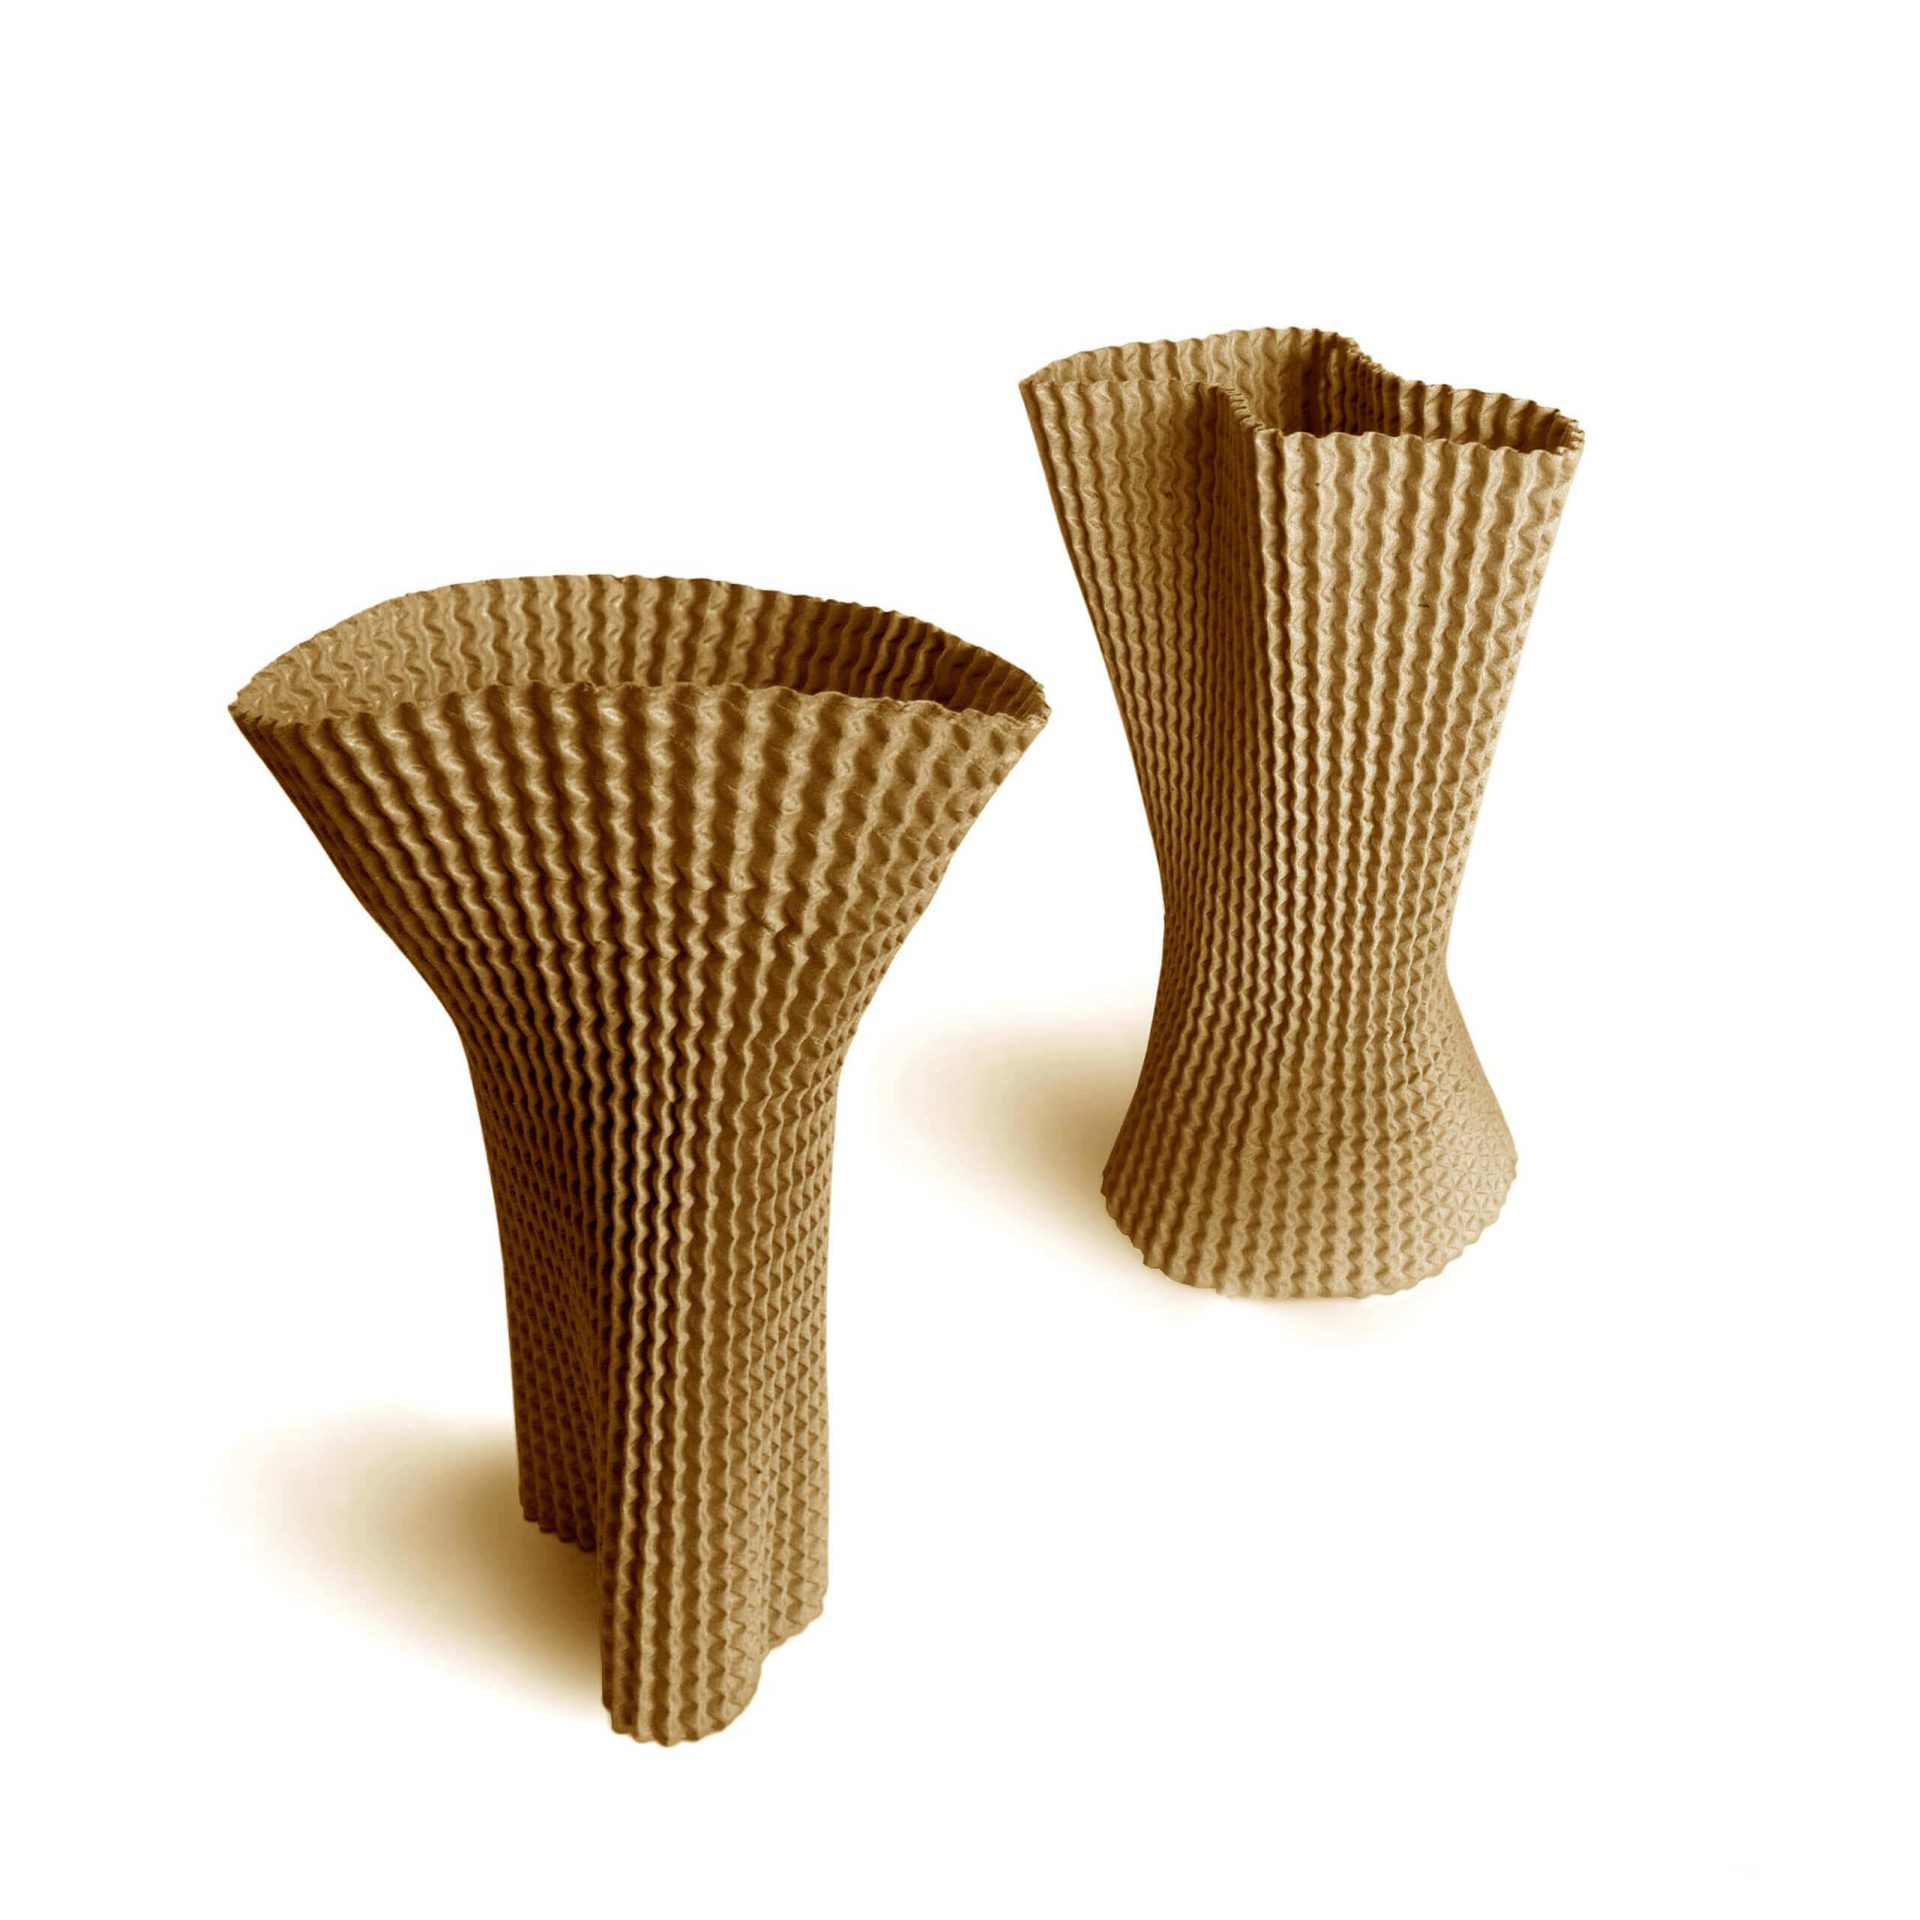 Paolo Ulian - Cardboard vase